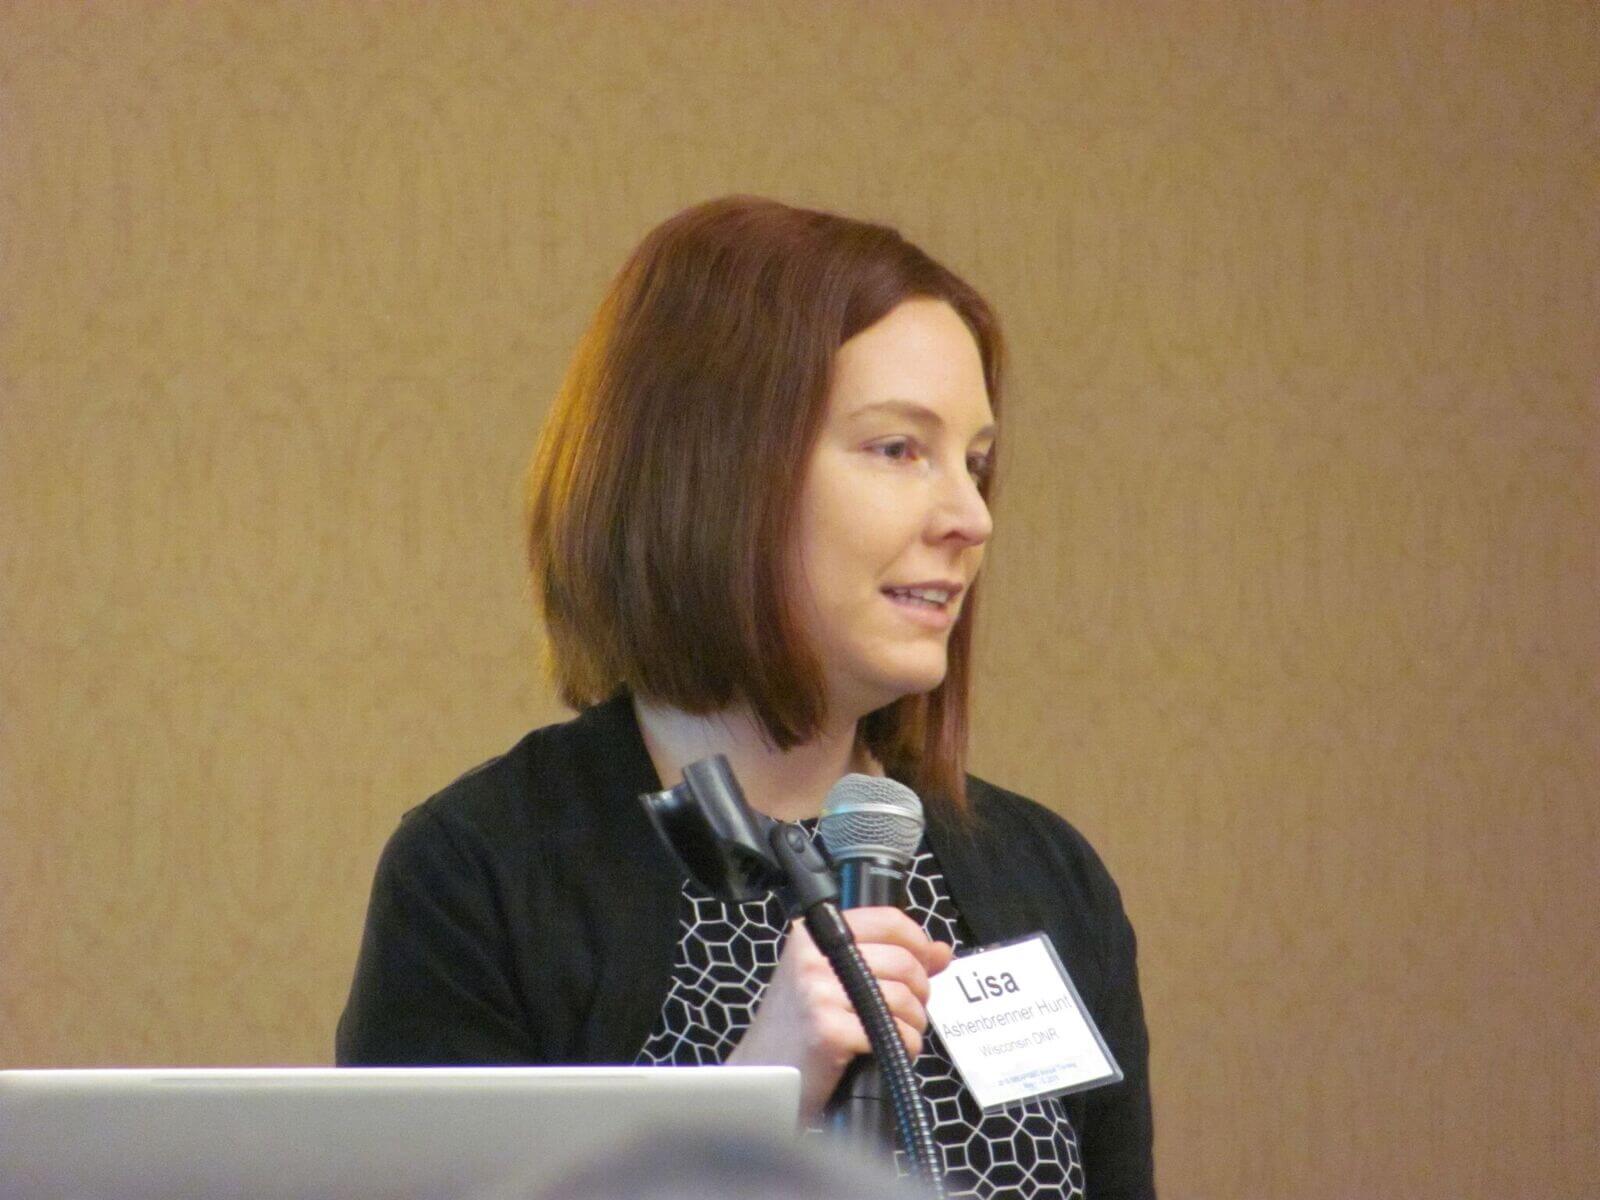 Image of Lisa giving a presentation